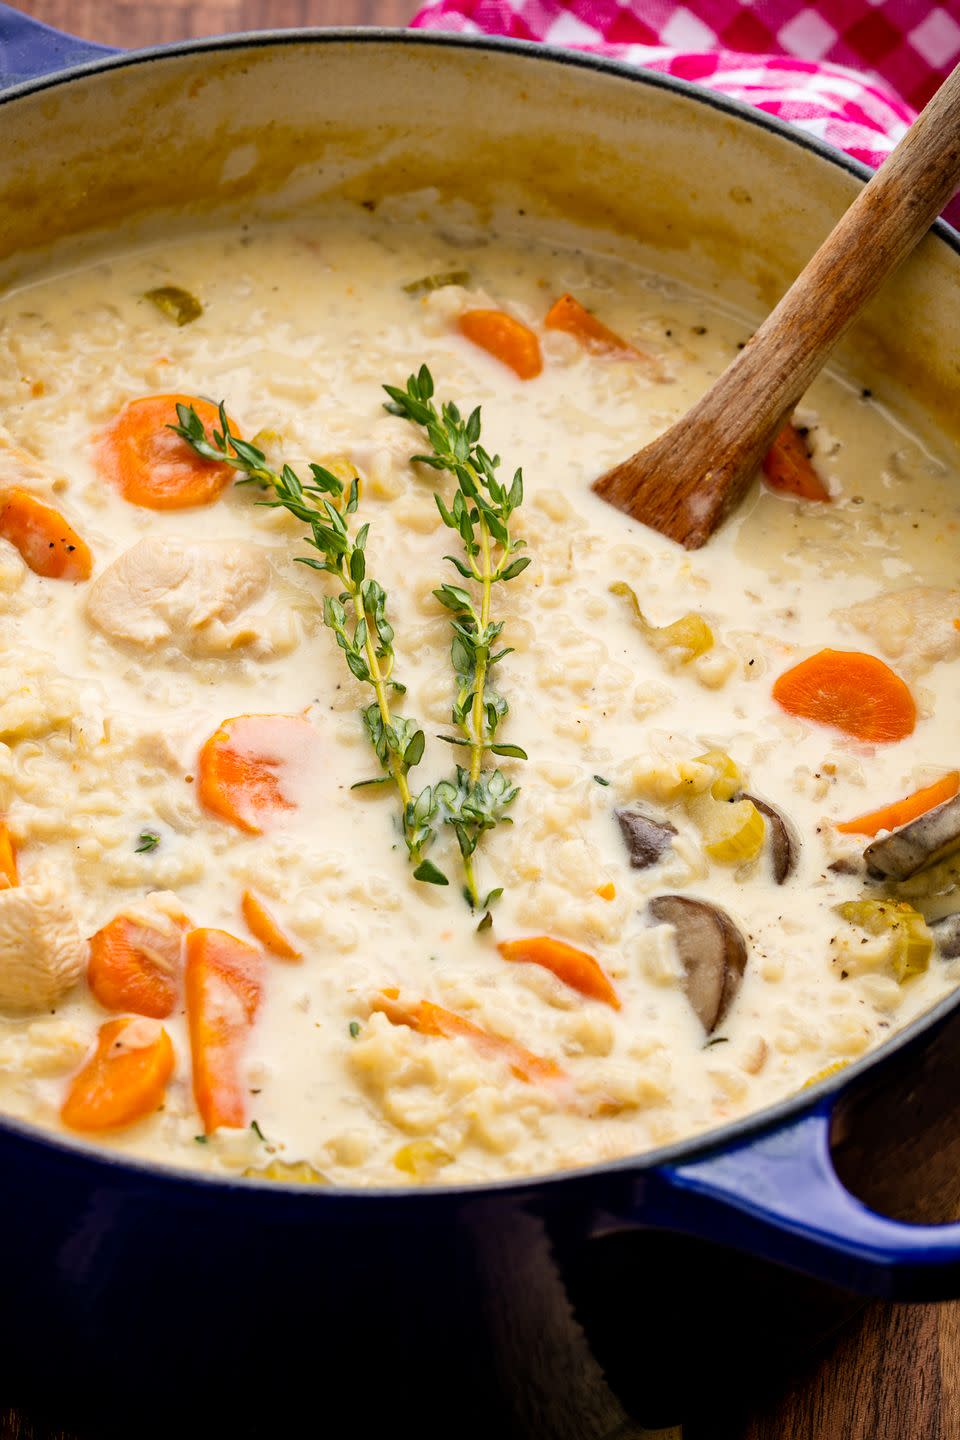 68) Creamy Chicken and Mushroom Soup